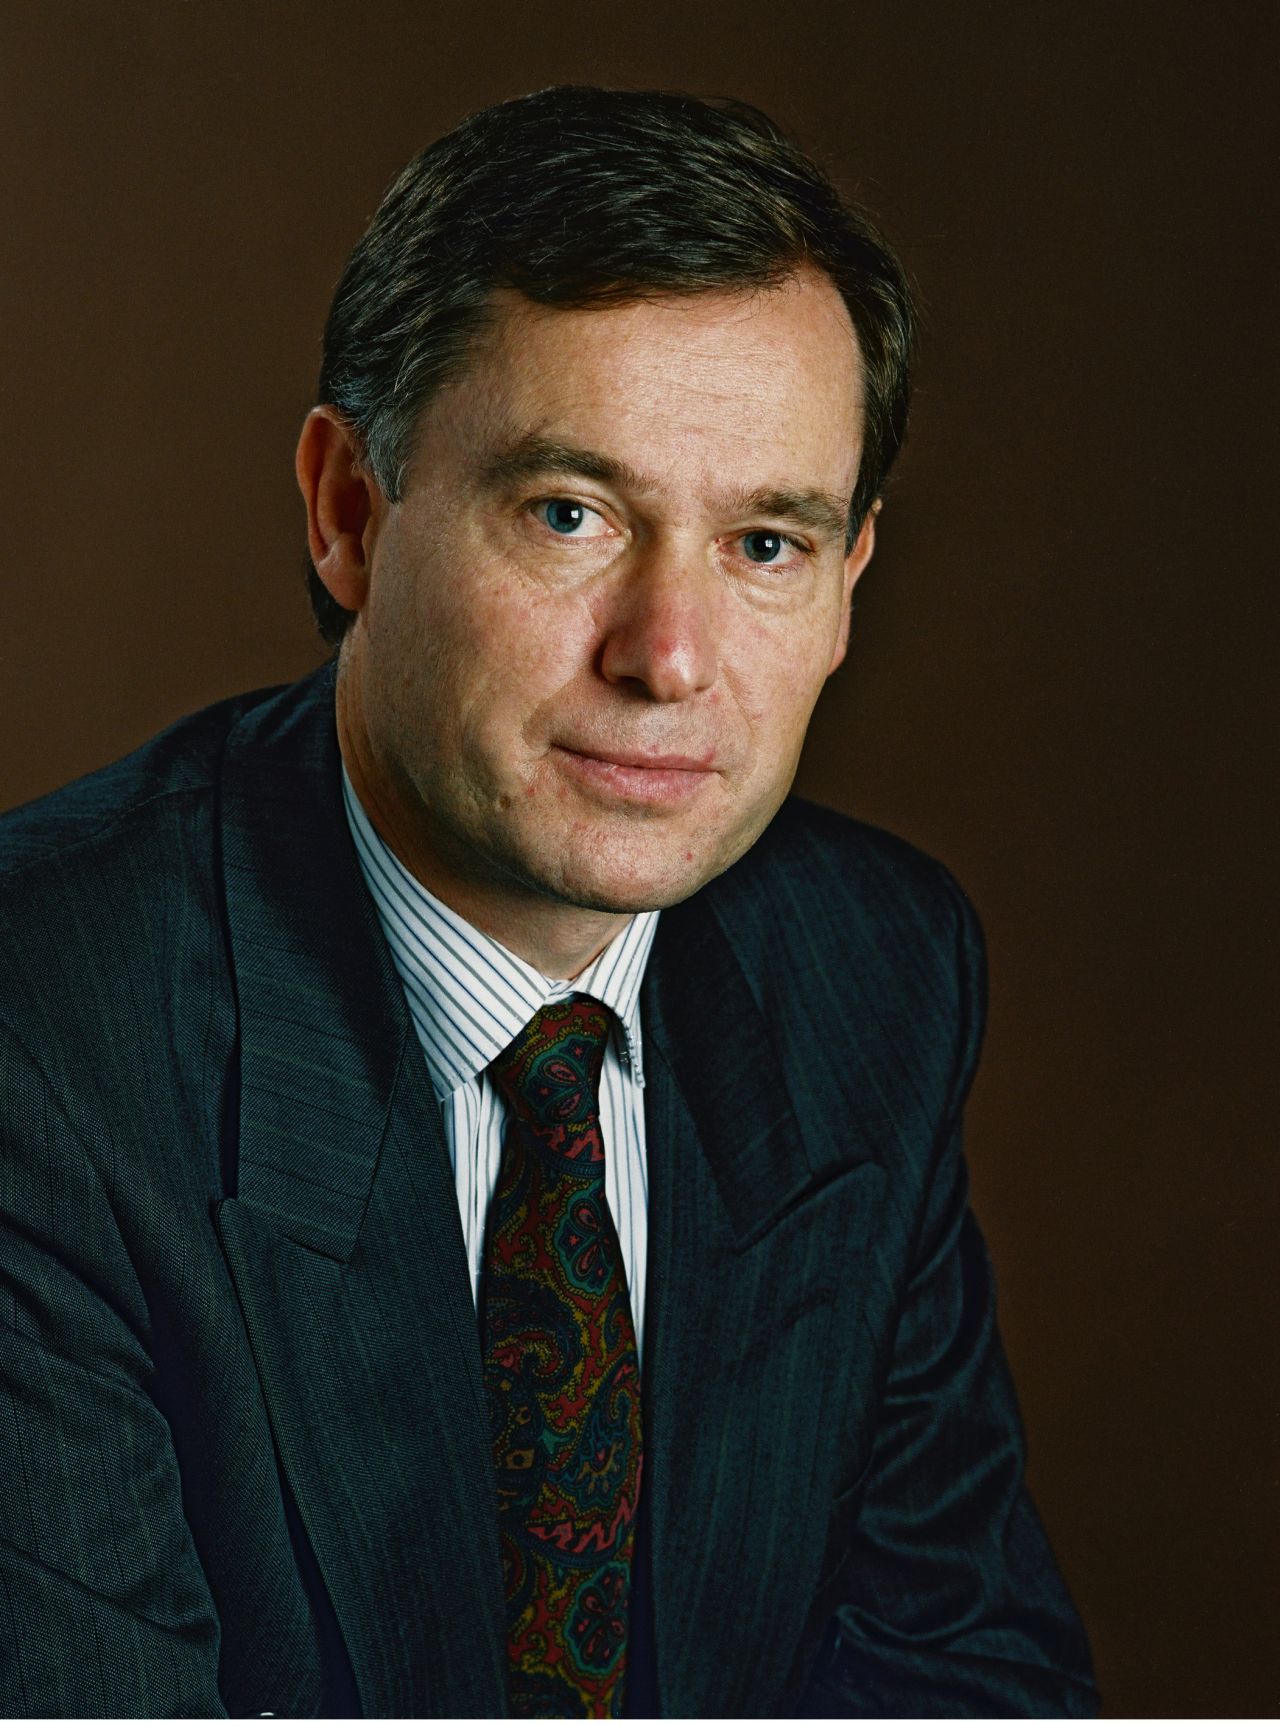 Porträtbild von Horst Köhler, 1989.